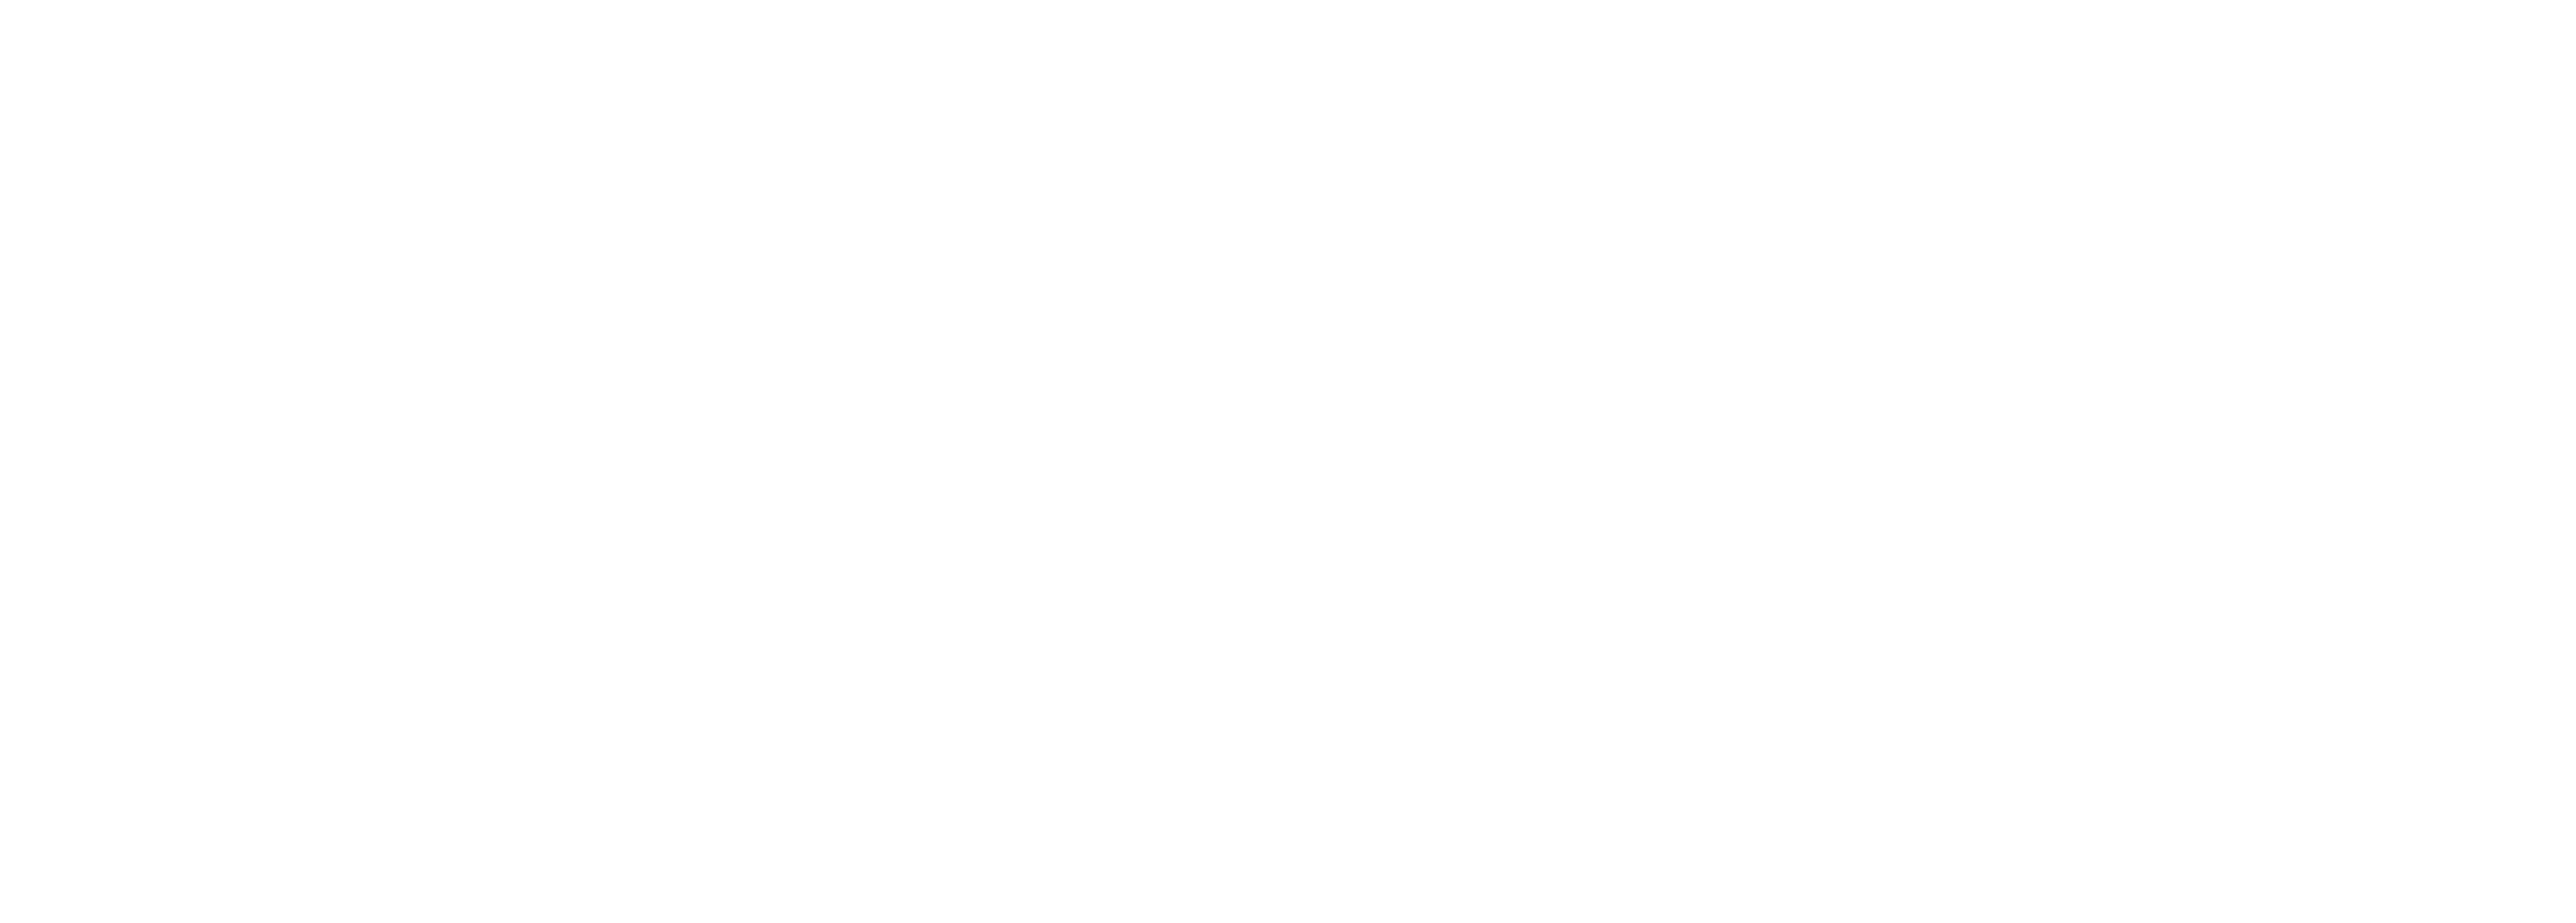 beatrice-christian-logo-white